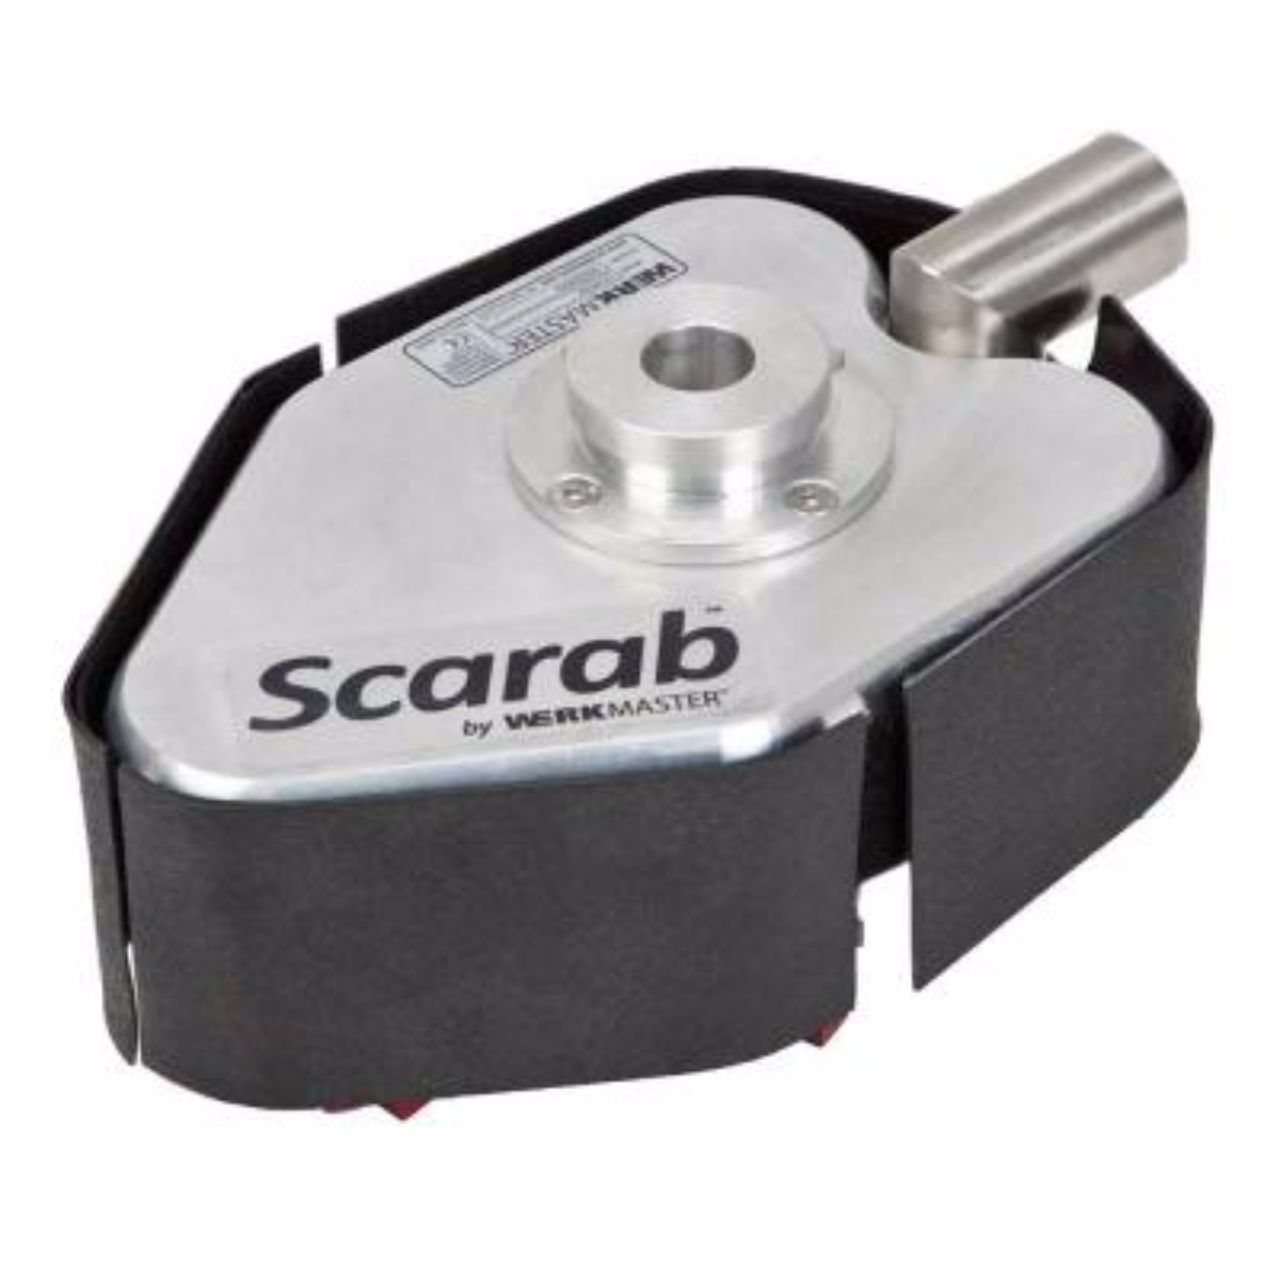 Werkmaster Scarab Hardwood Floor Sander Review: Product Description, Pros, Cons, and Verdict